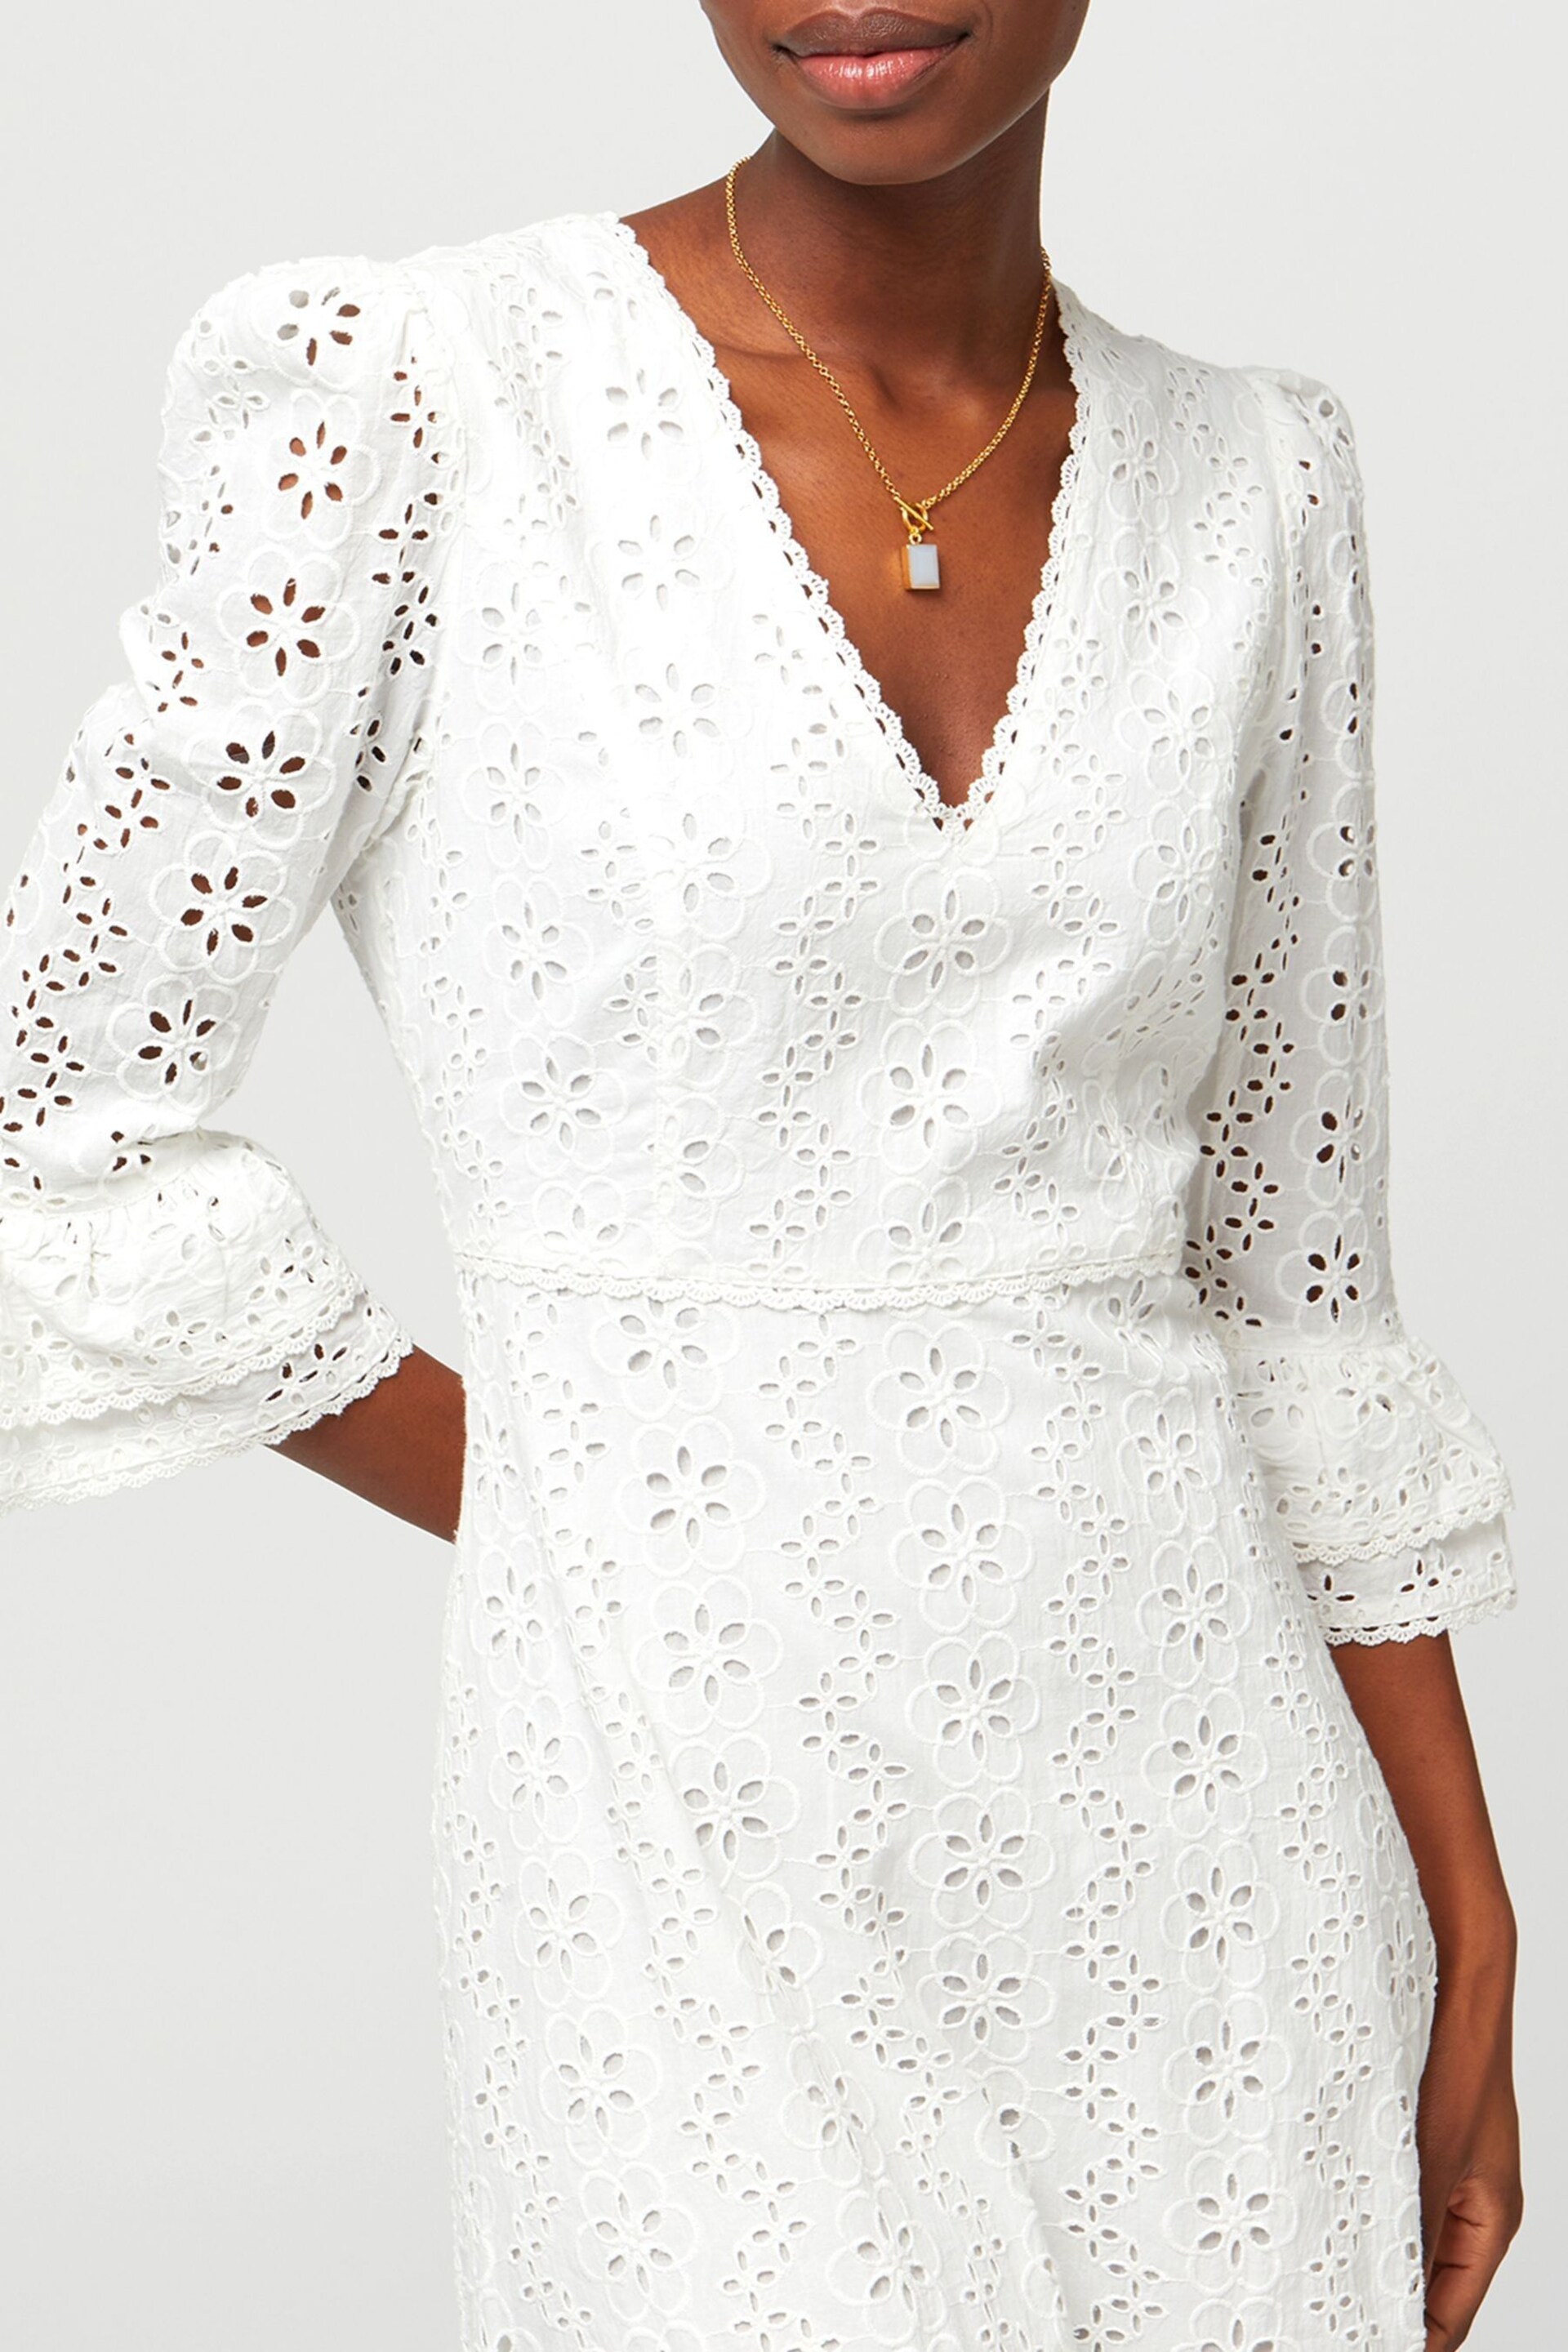 Aspiga Victoria Broderie White Dress - Image 7 of 8